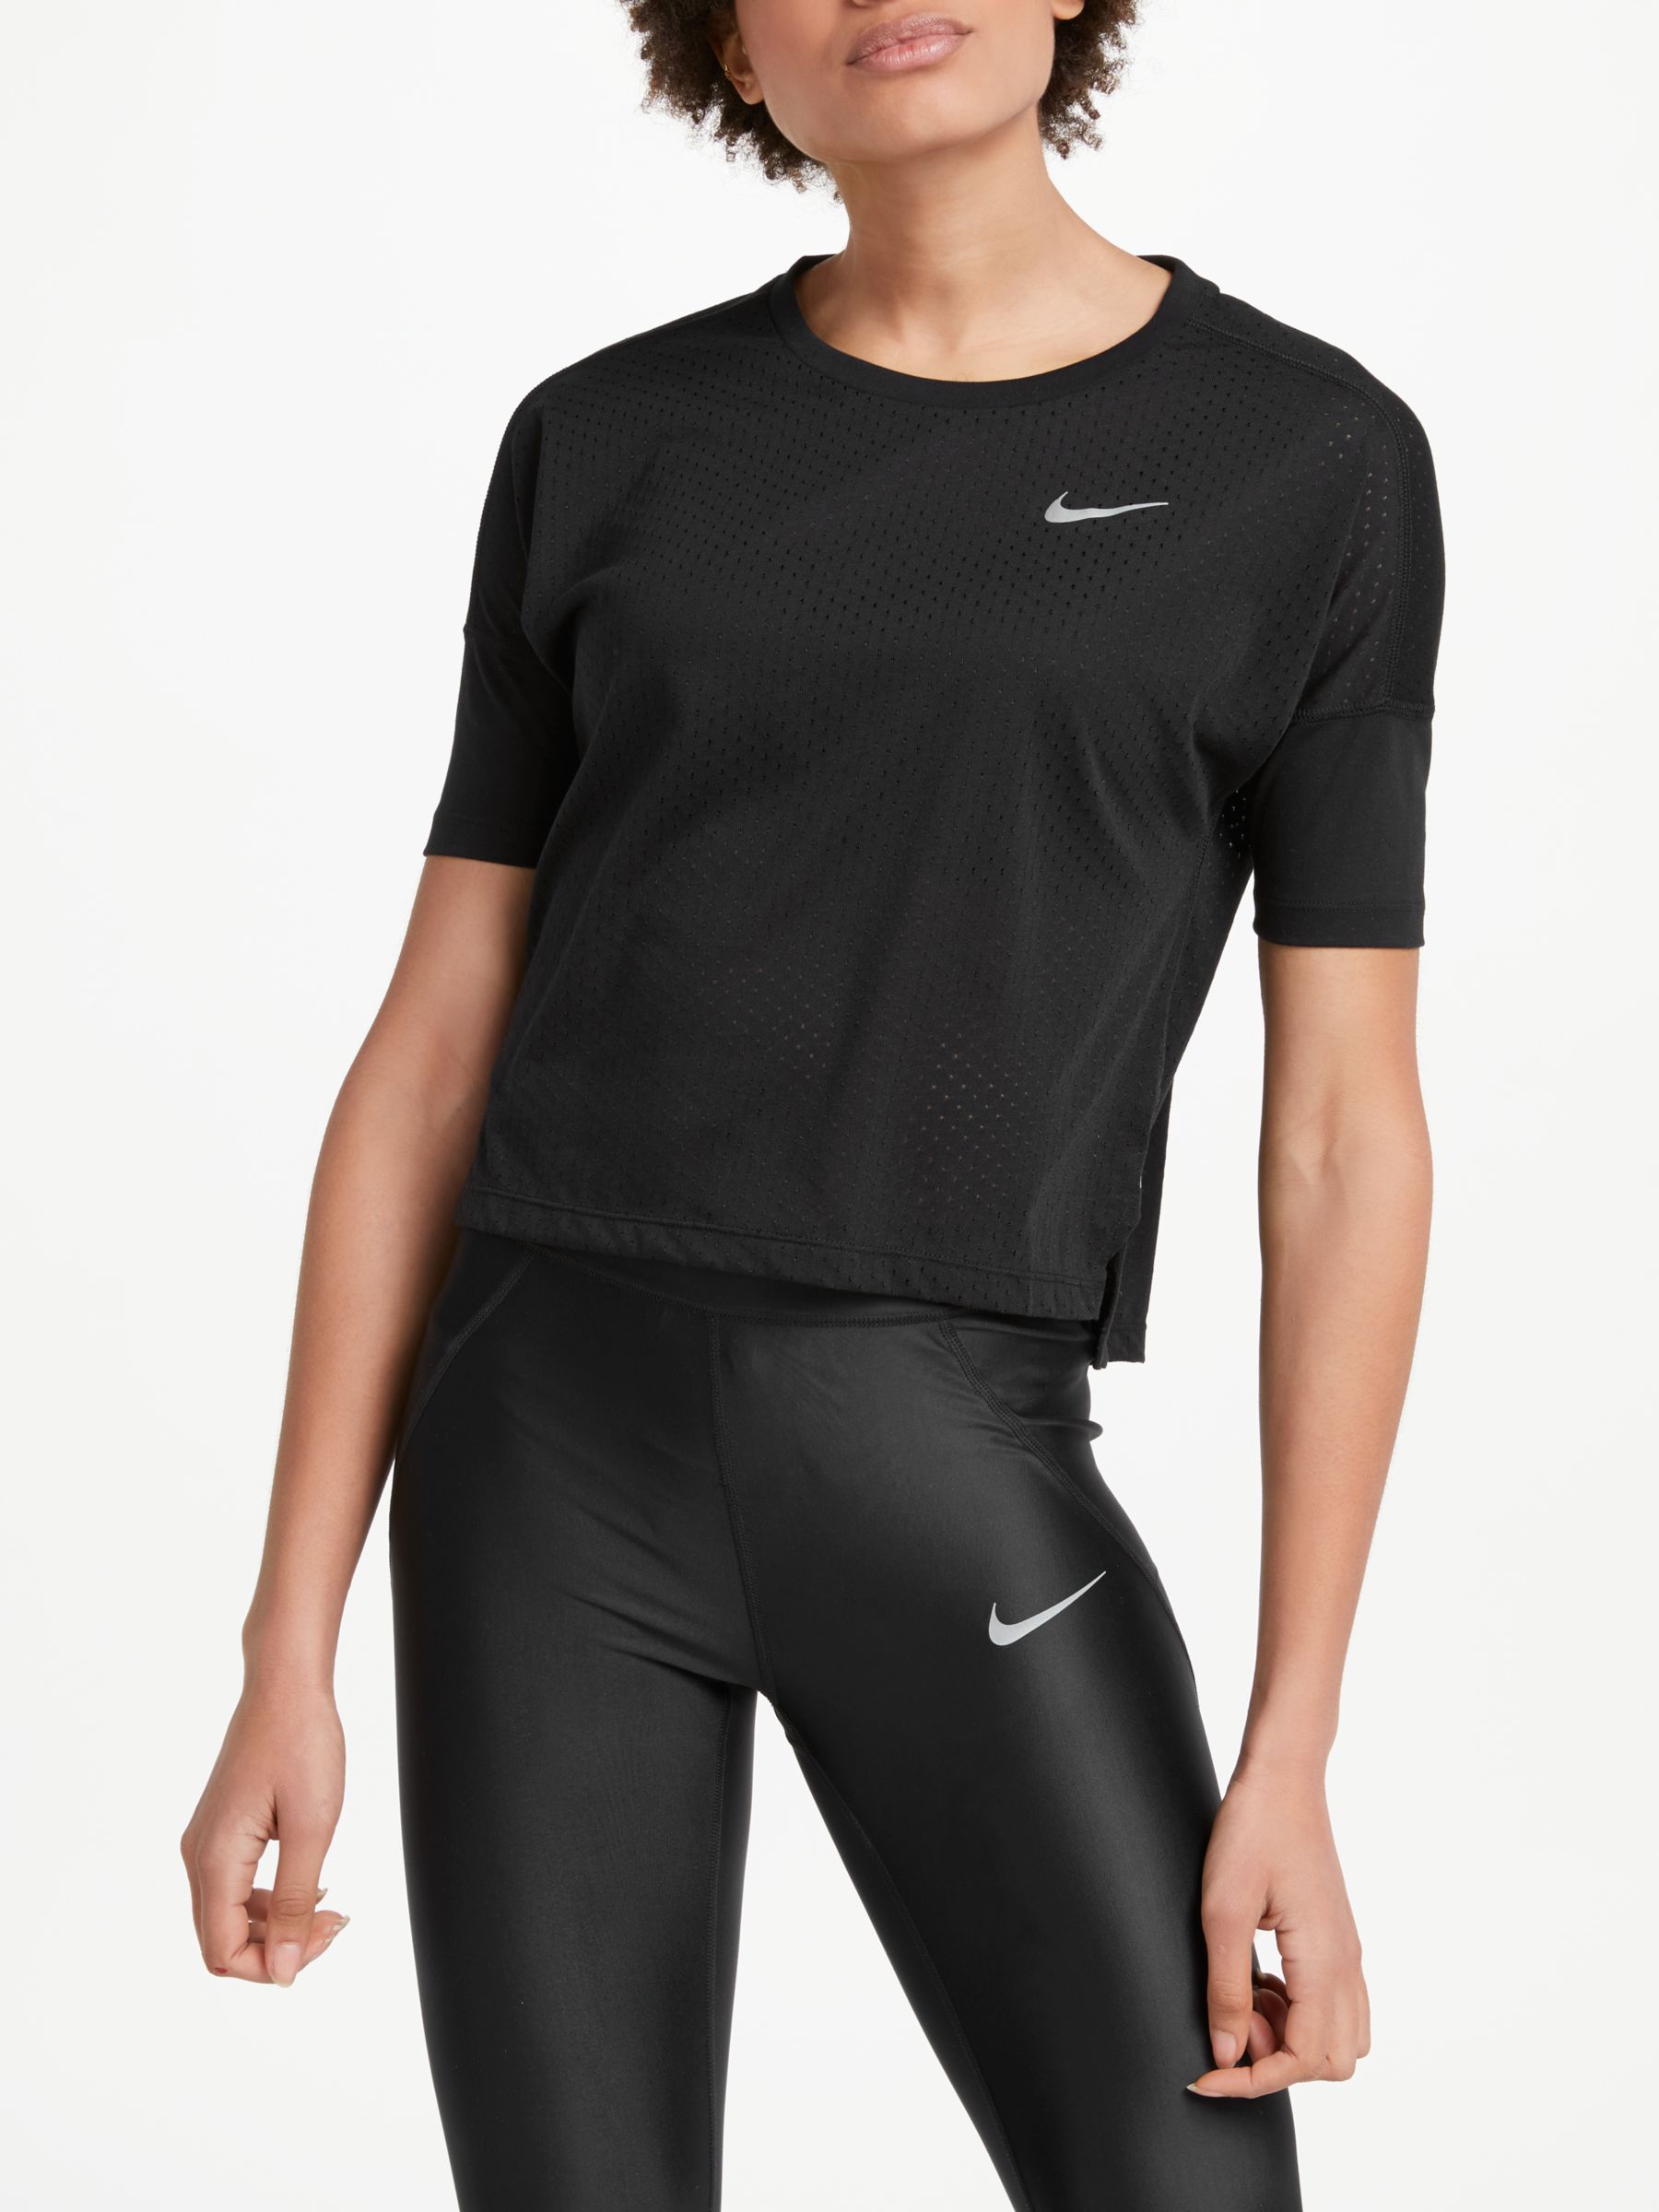 Nike Breathe Tailwind Short Sleeve Running Top, Black